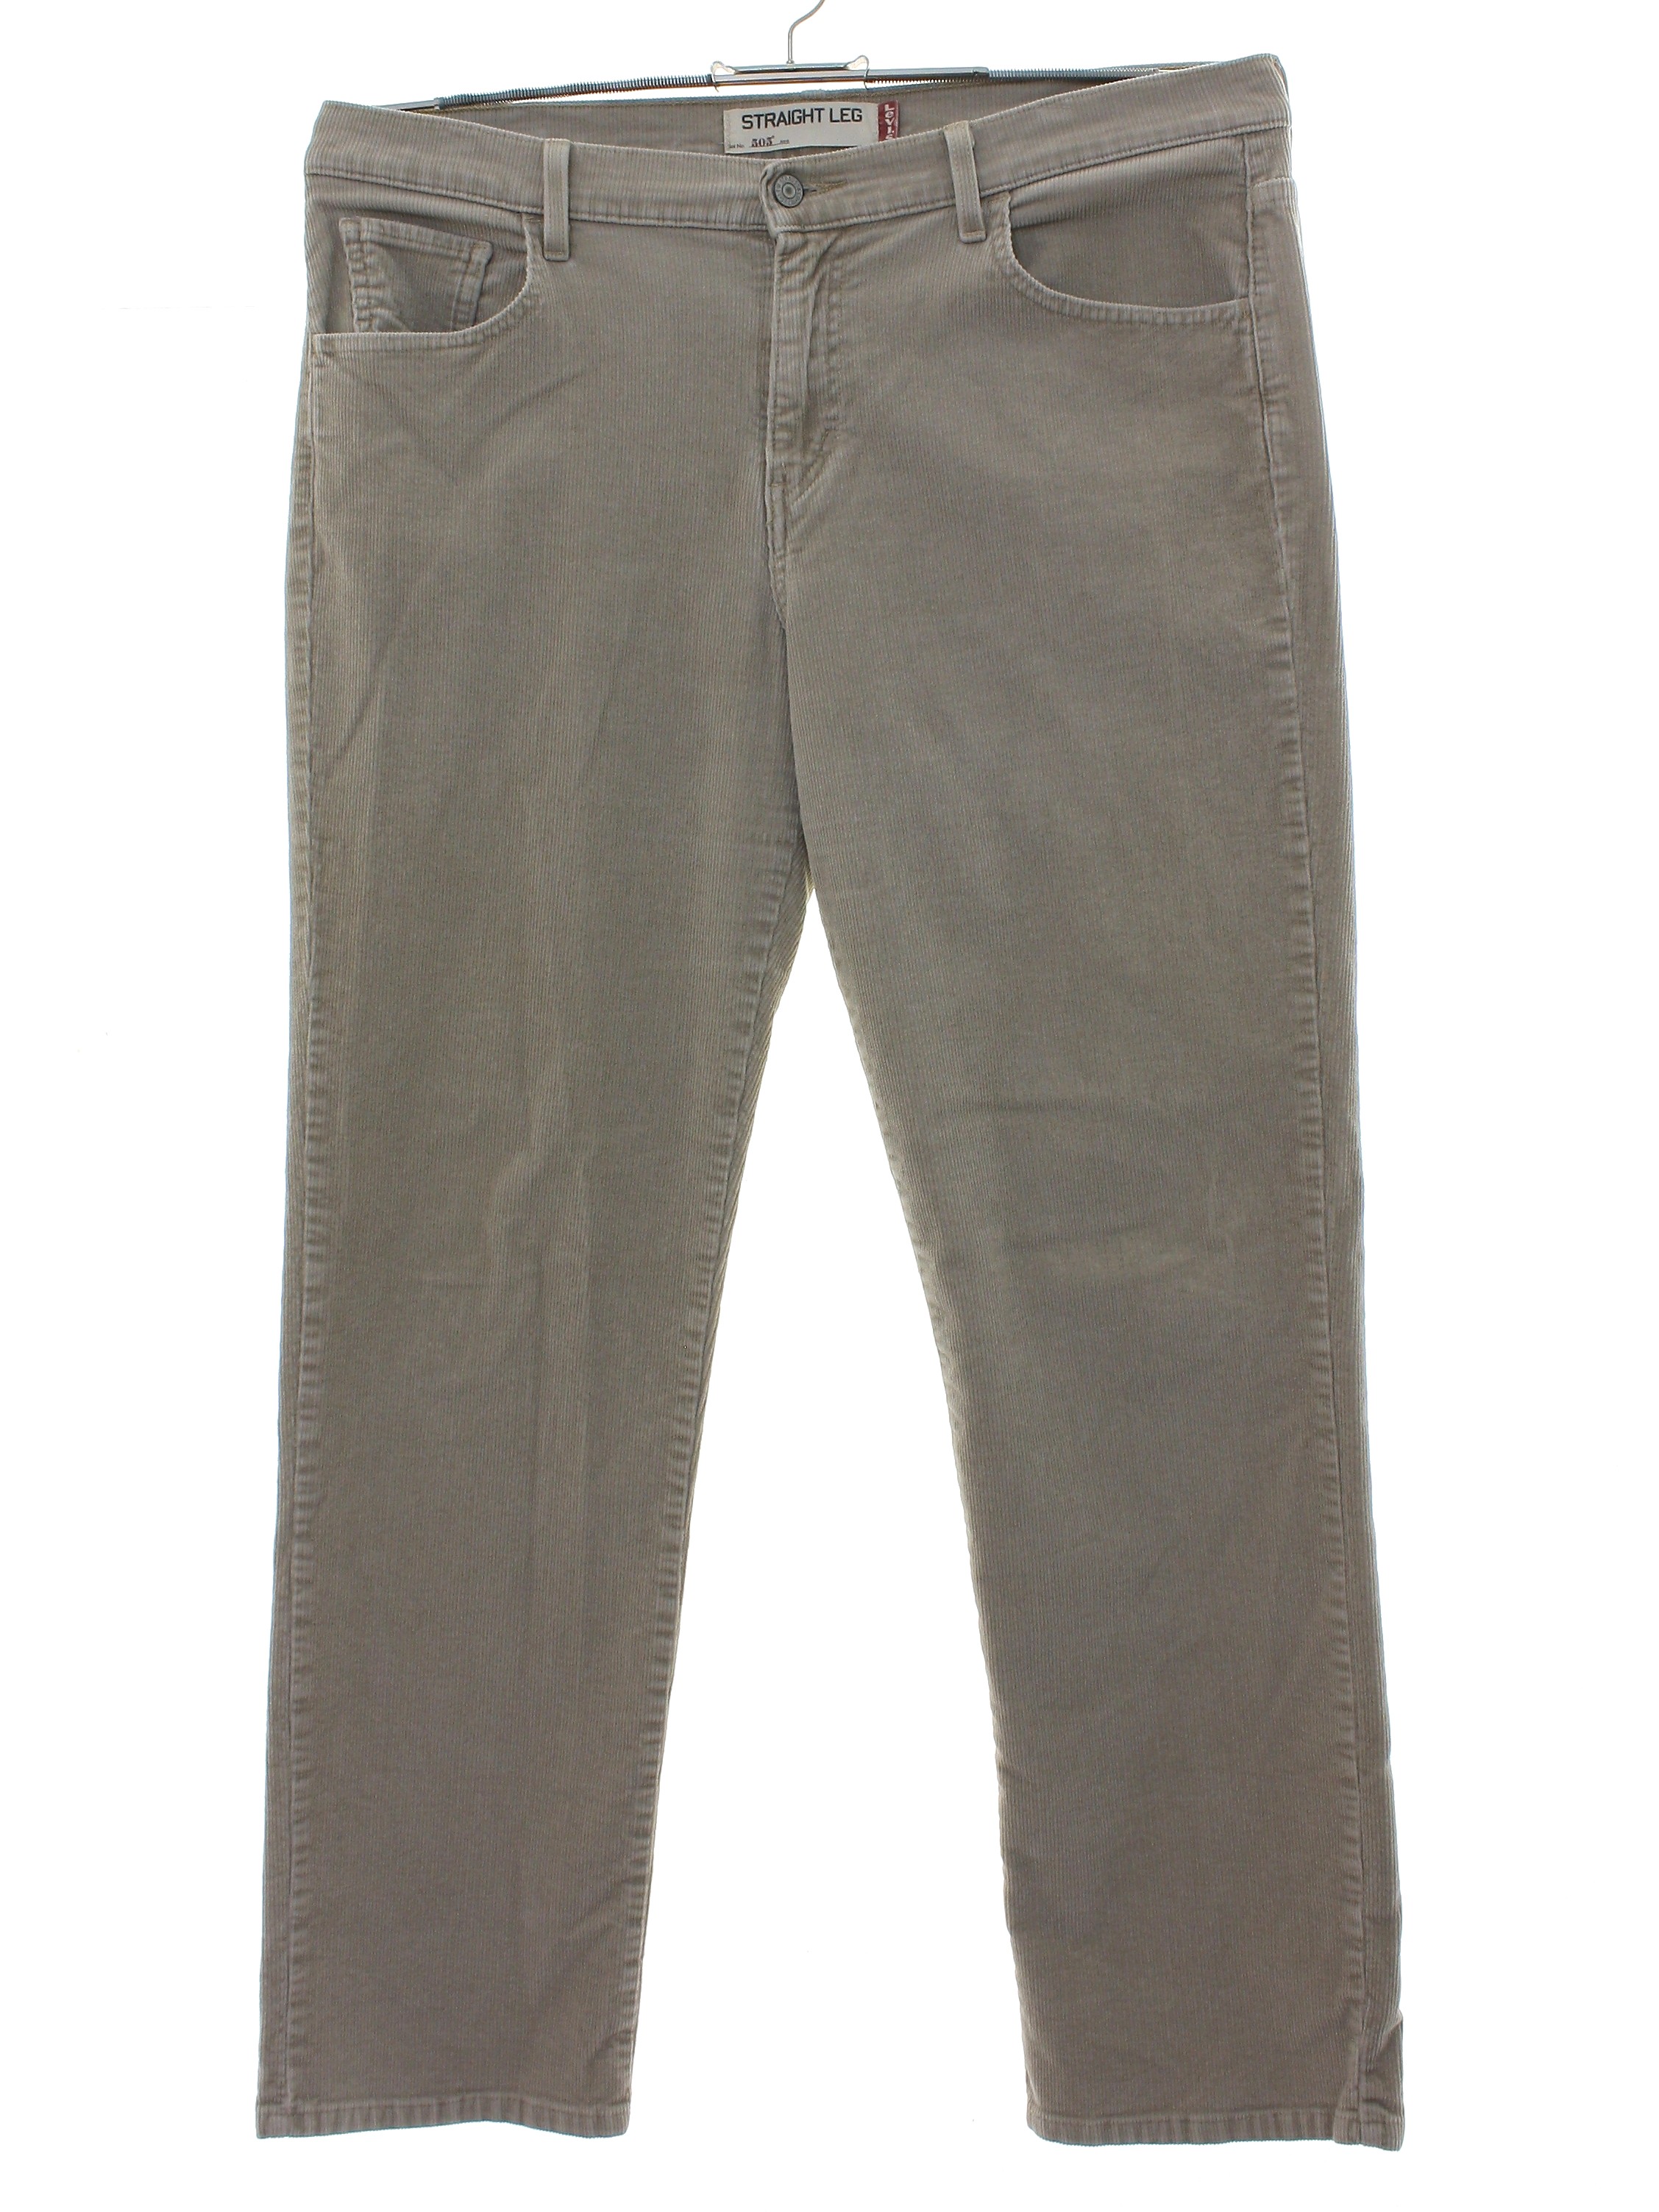 Pants: 90s -Levis 505s- Womens slightly worn fawn cotton corduroy